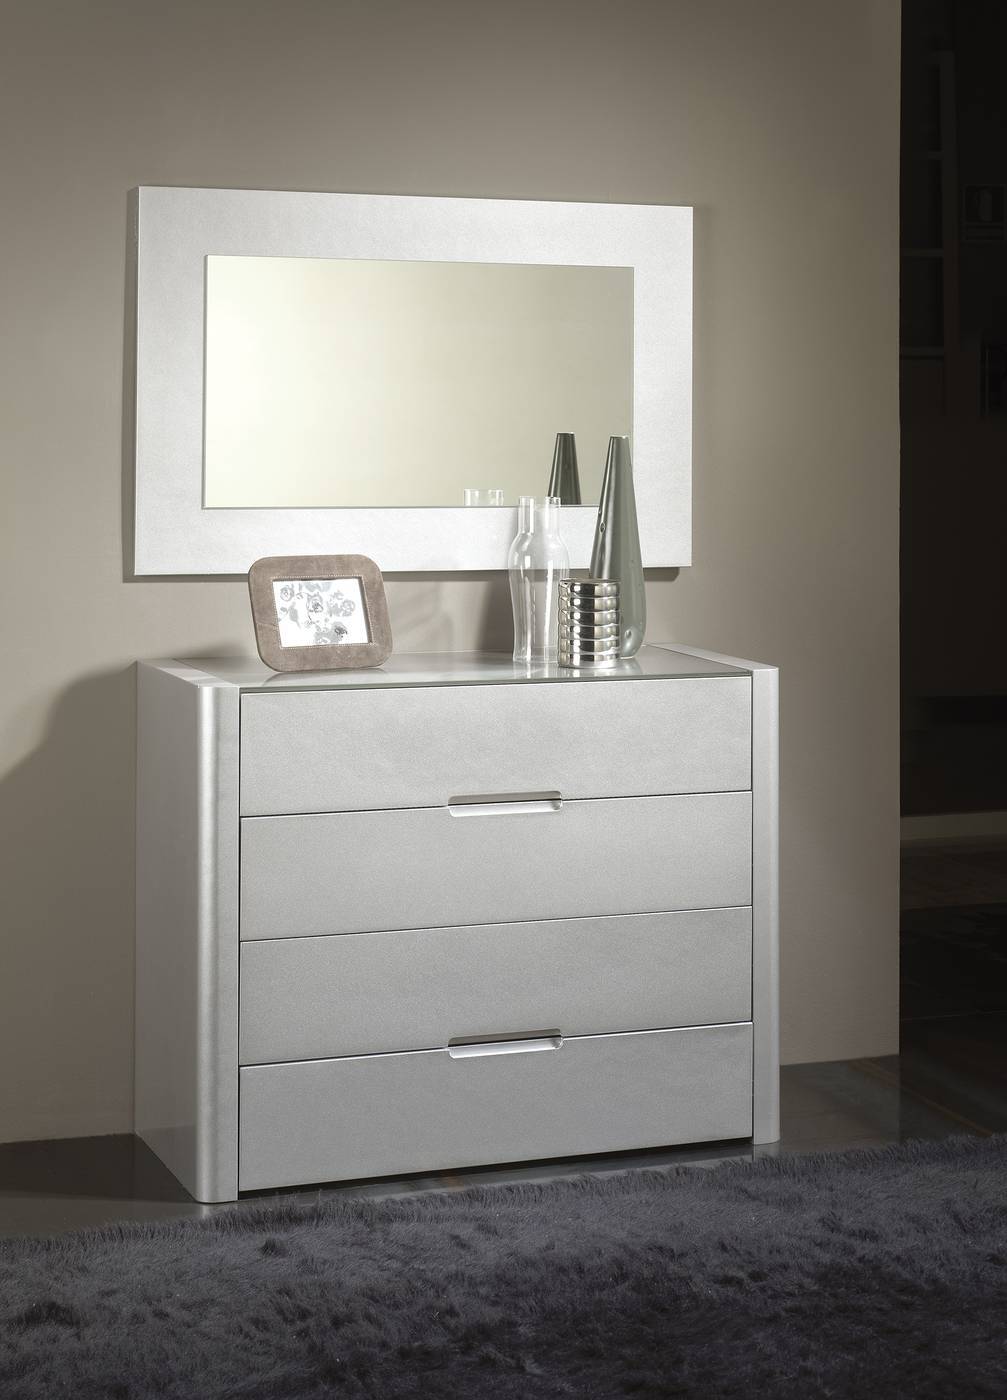 Espejo Plata LD E-96 - Espejo rectangular, con marco lacado en color plata brillo